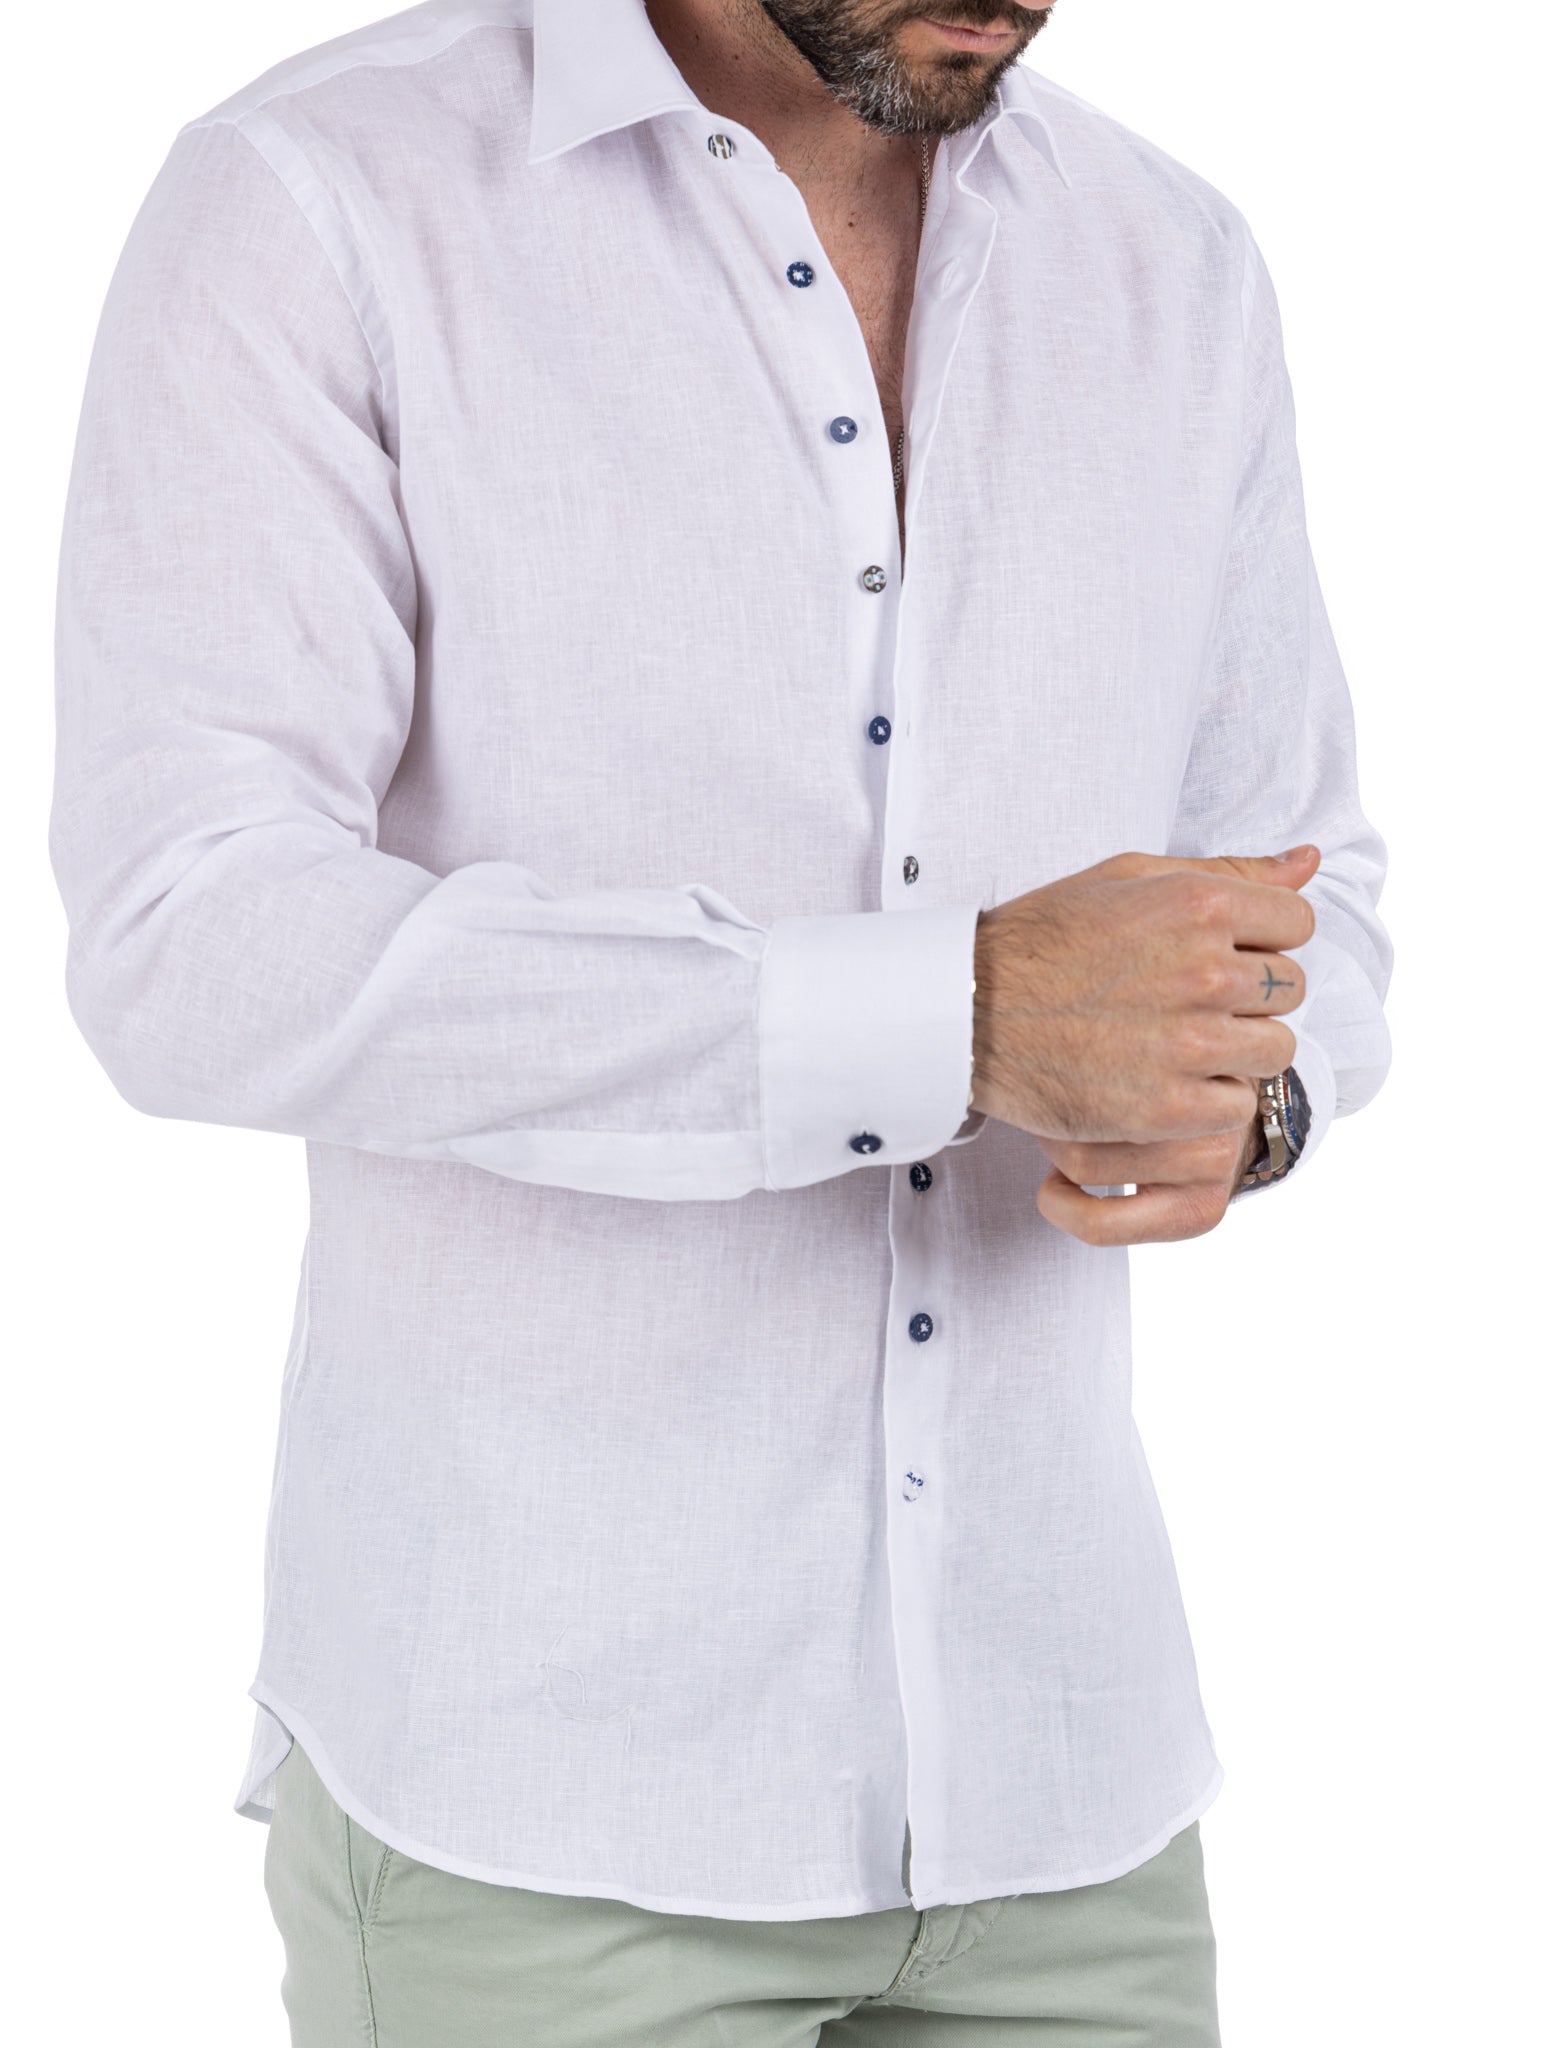 Praiano - white linen French shirt